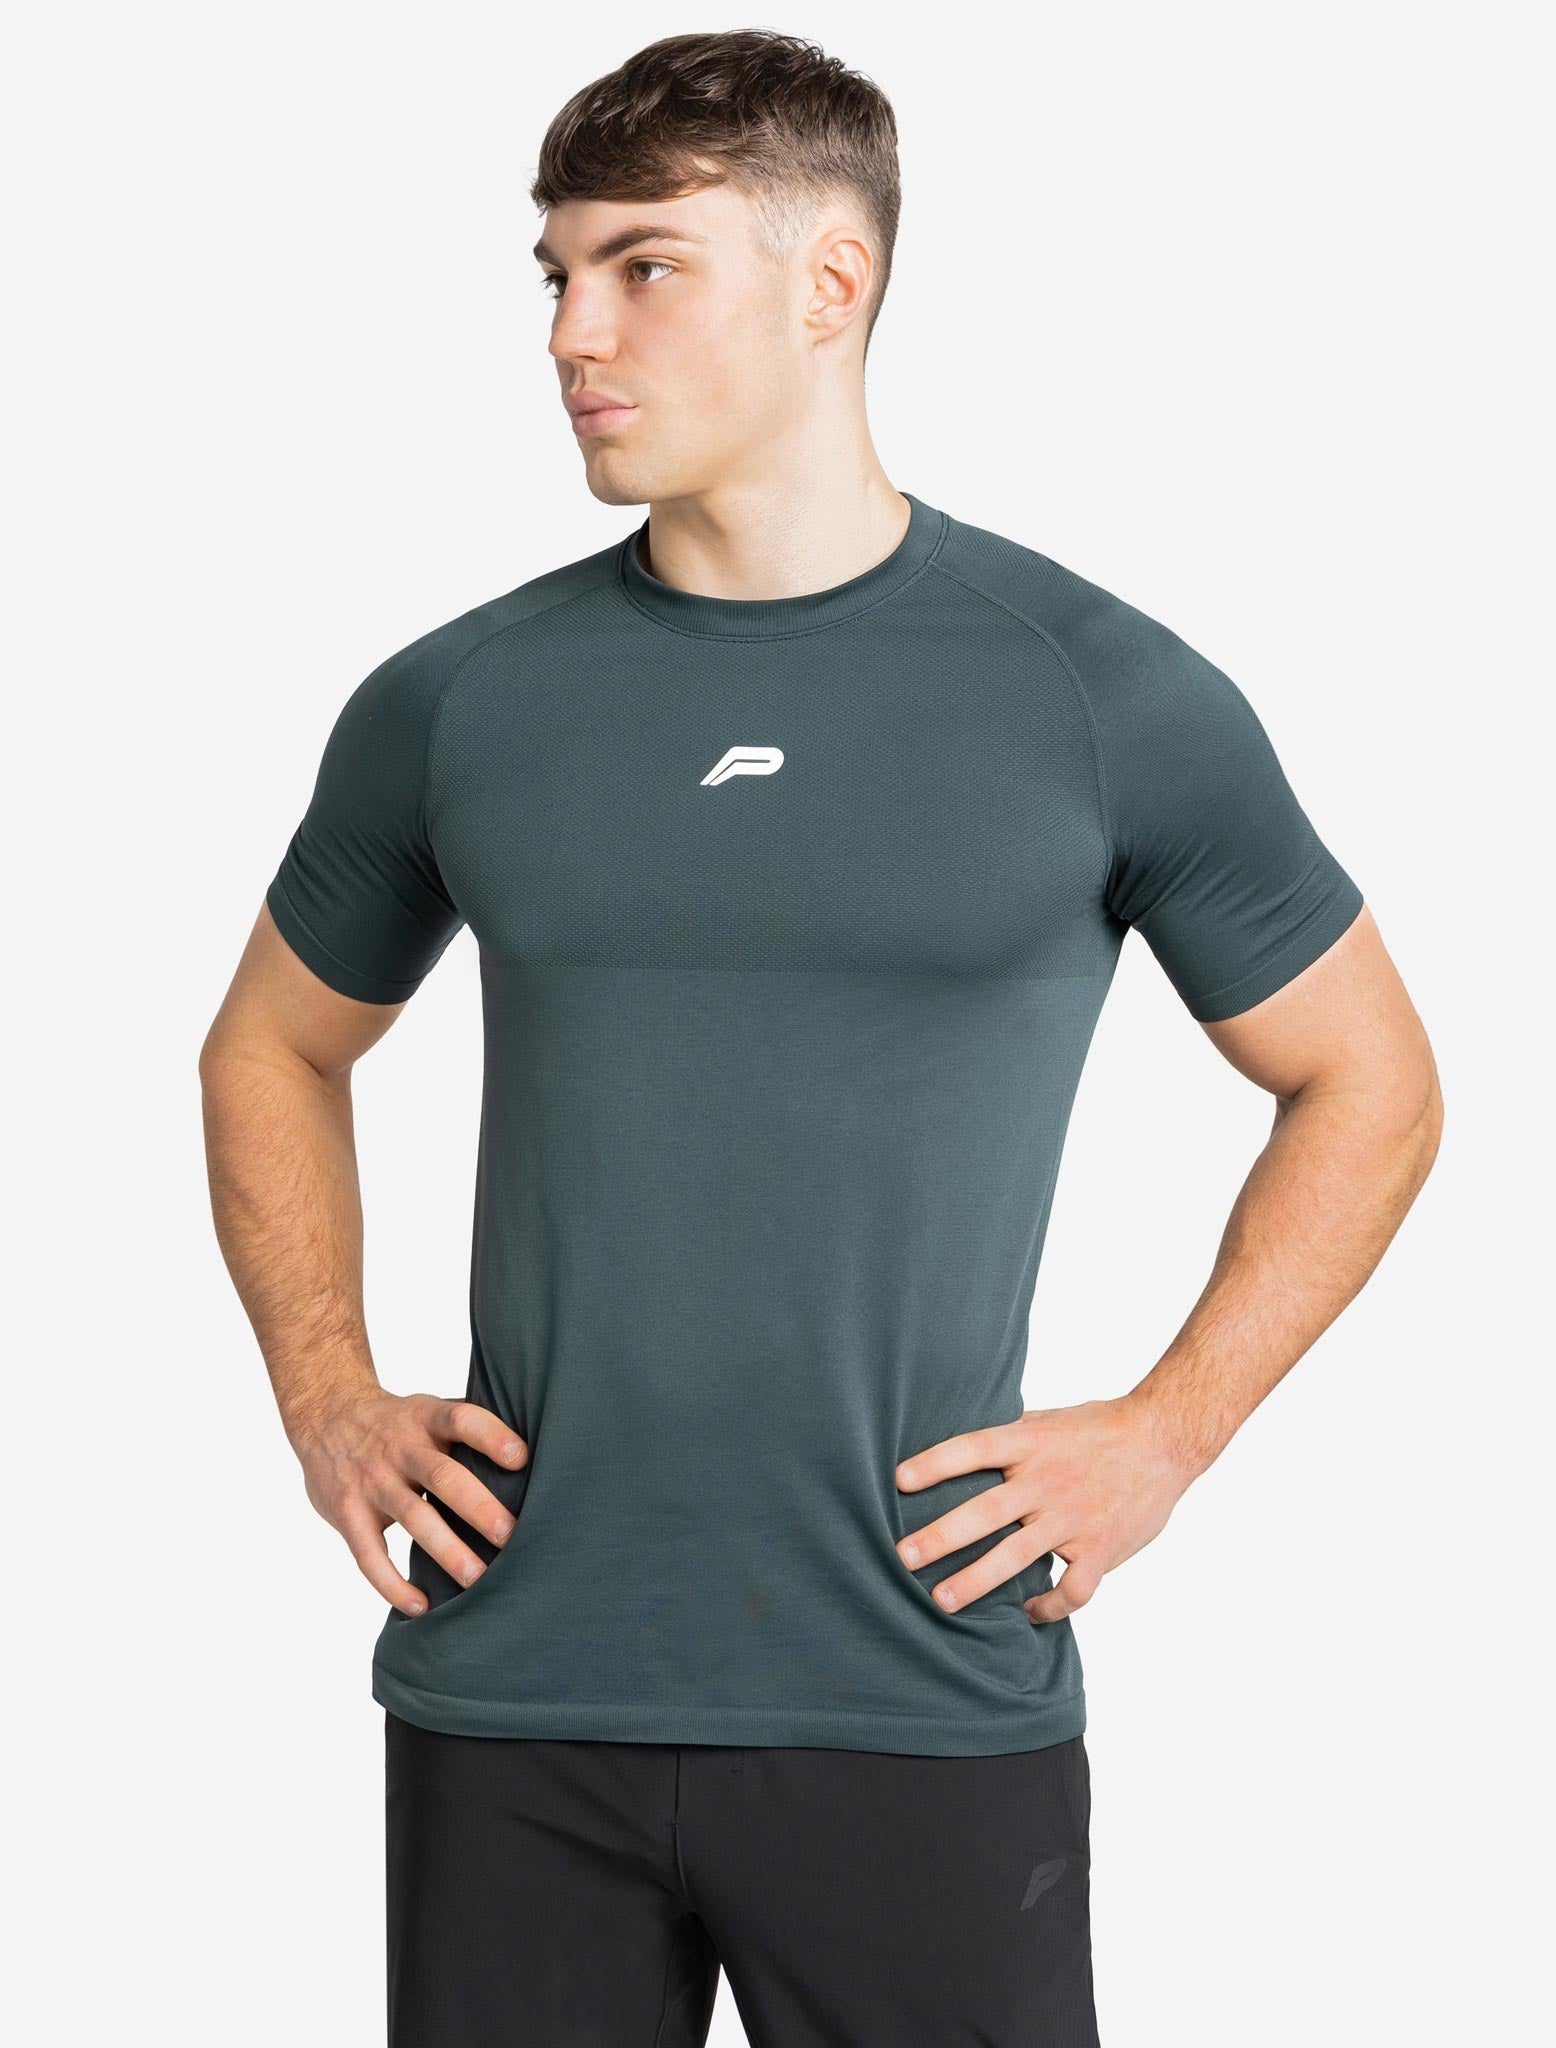 Seamless T-shirt / Dark Green Pursue Fitness 1